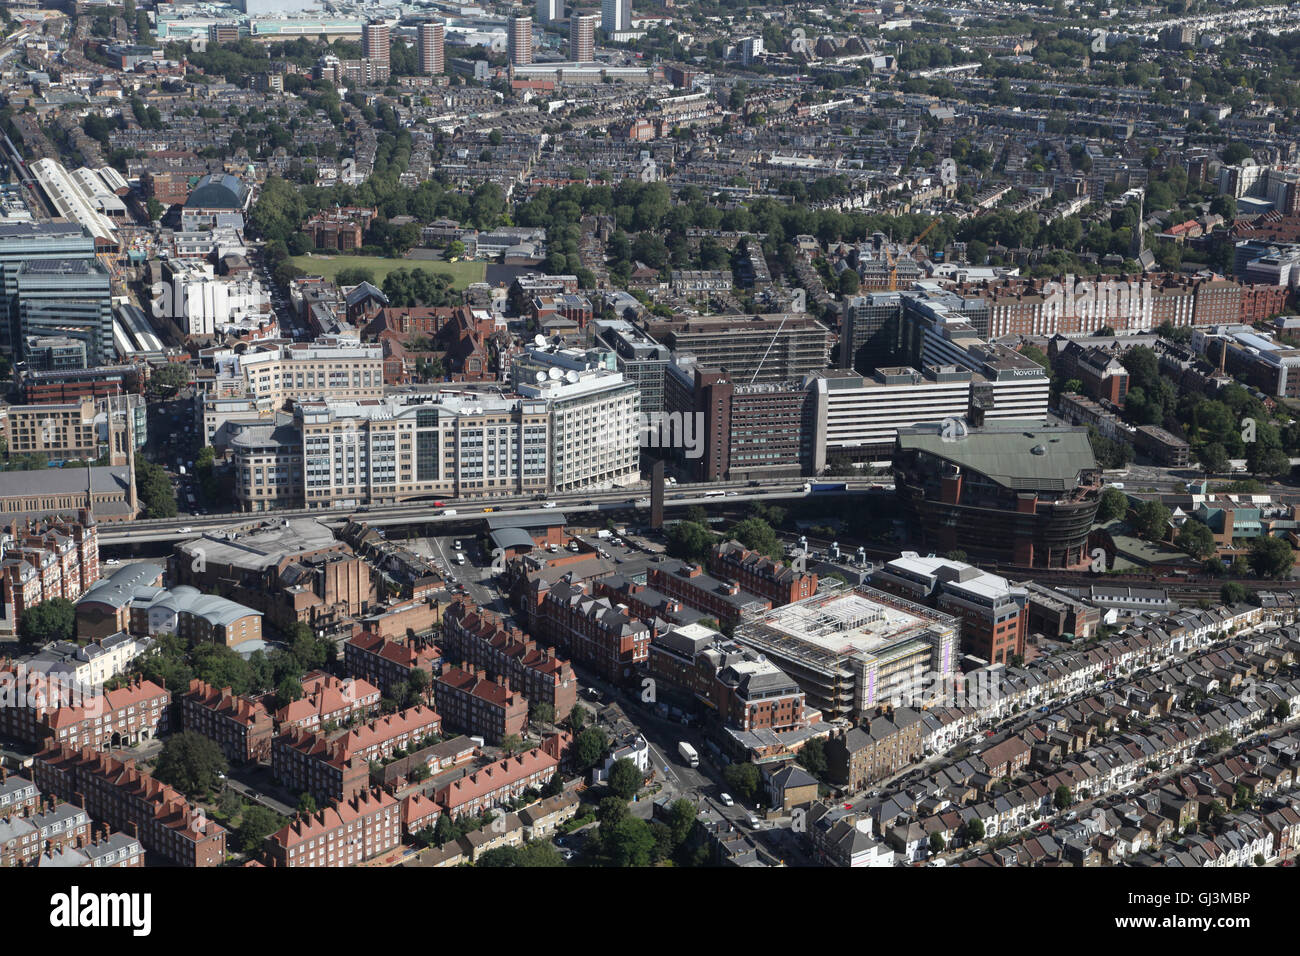 Vista aerea di Hammersmith, West London, incluso l'A4 cavalcavia, centro commerciale Broadway, Novotel London West etc Foto Stock